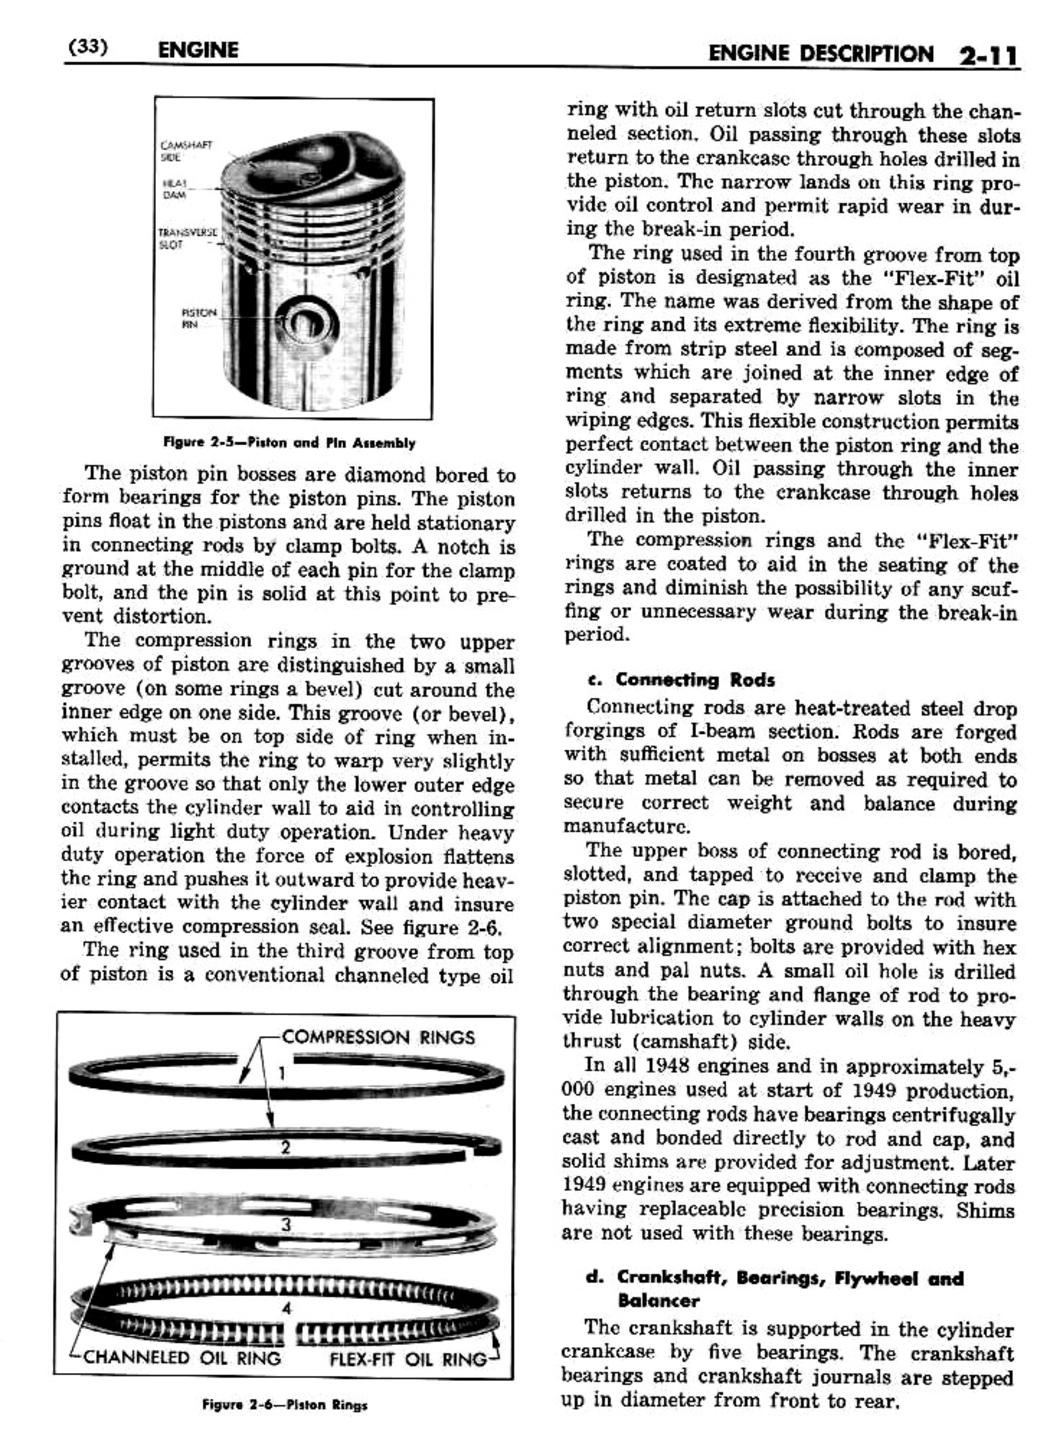 n_03 1948 Buick Shop Manual - Engine-011-011.jpg